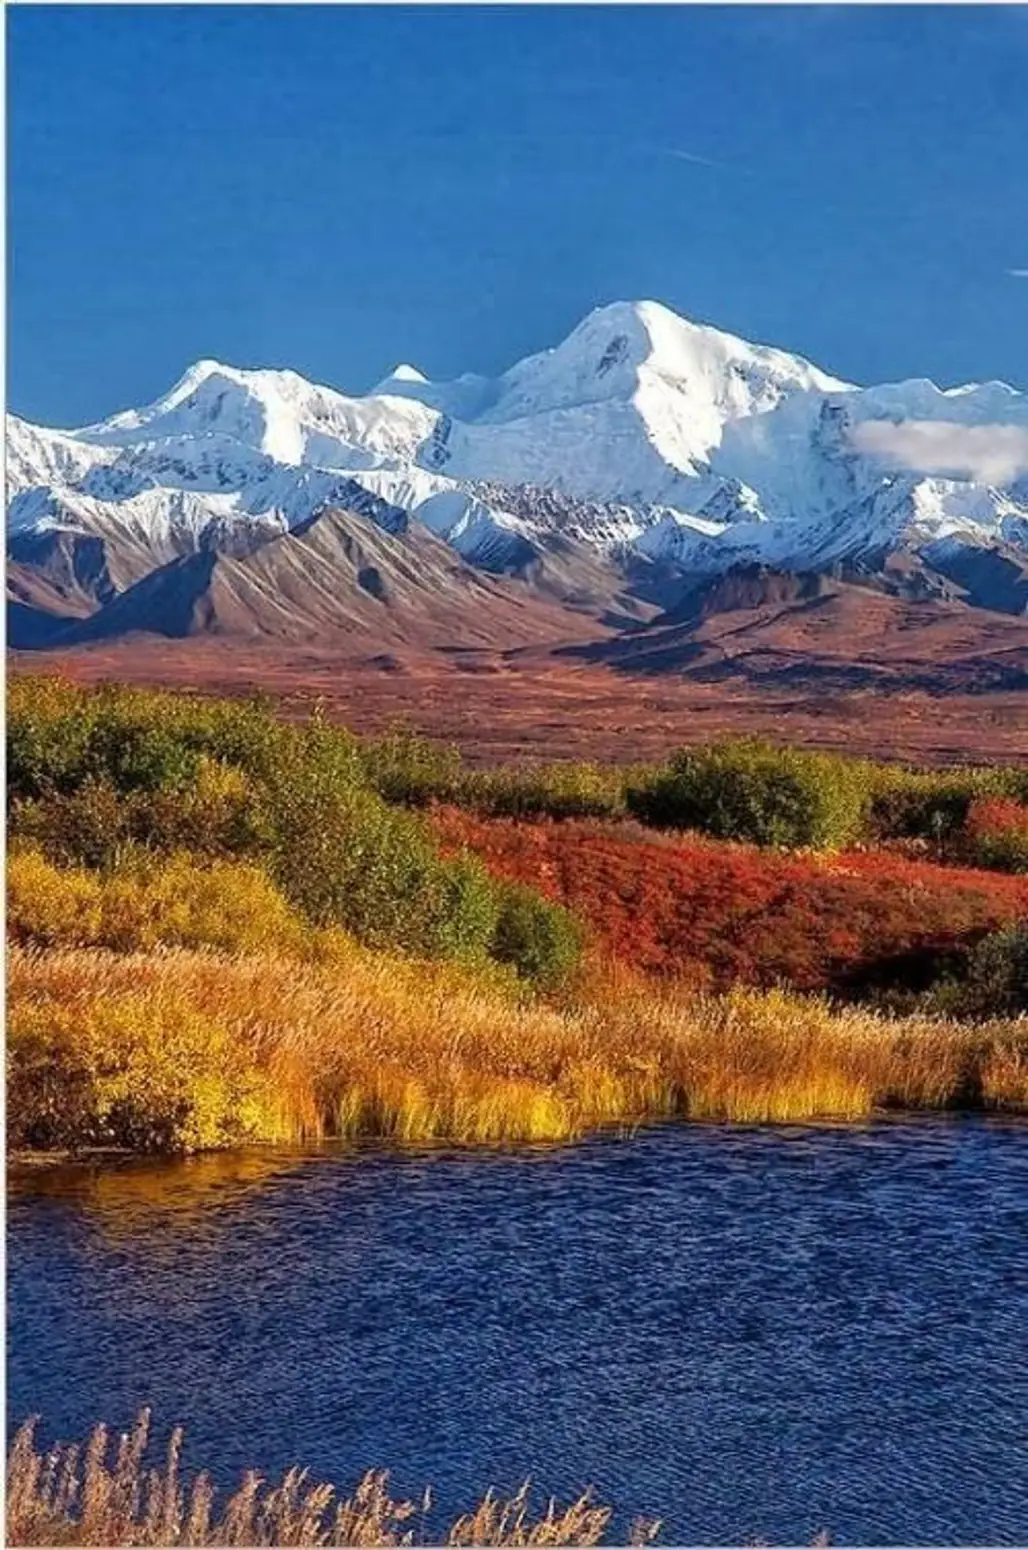 Mount Denali, Alaska, USA